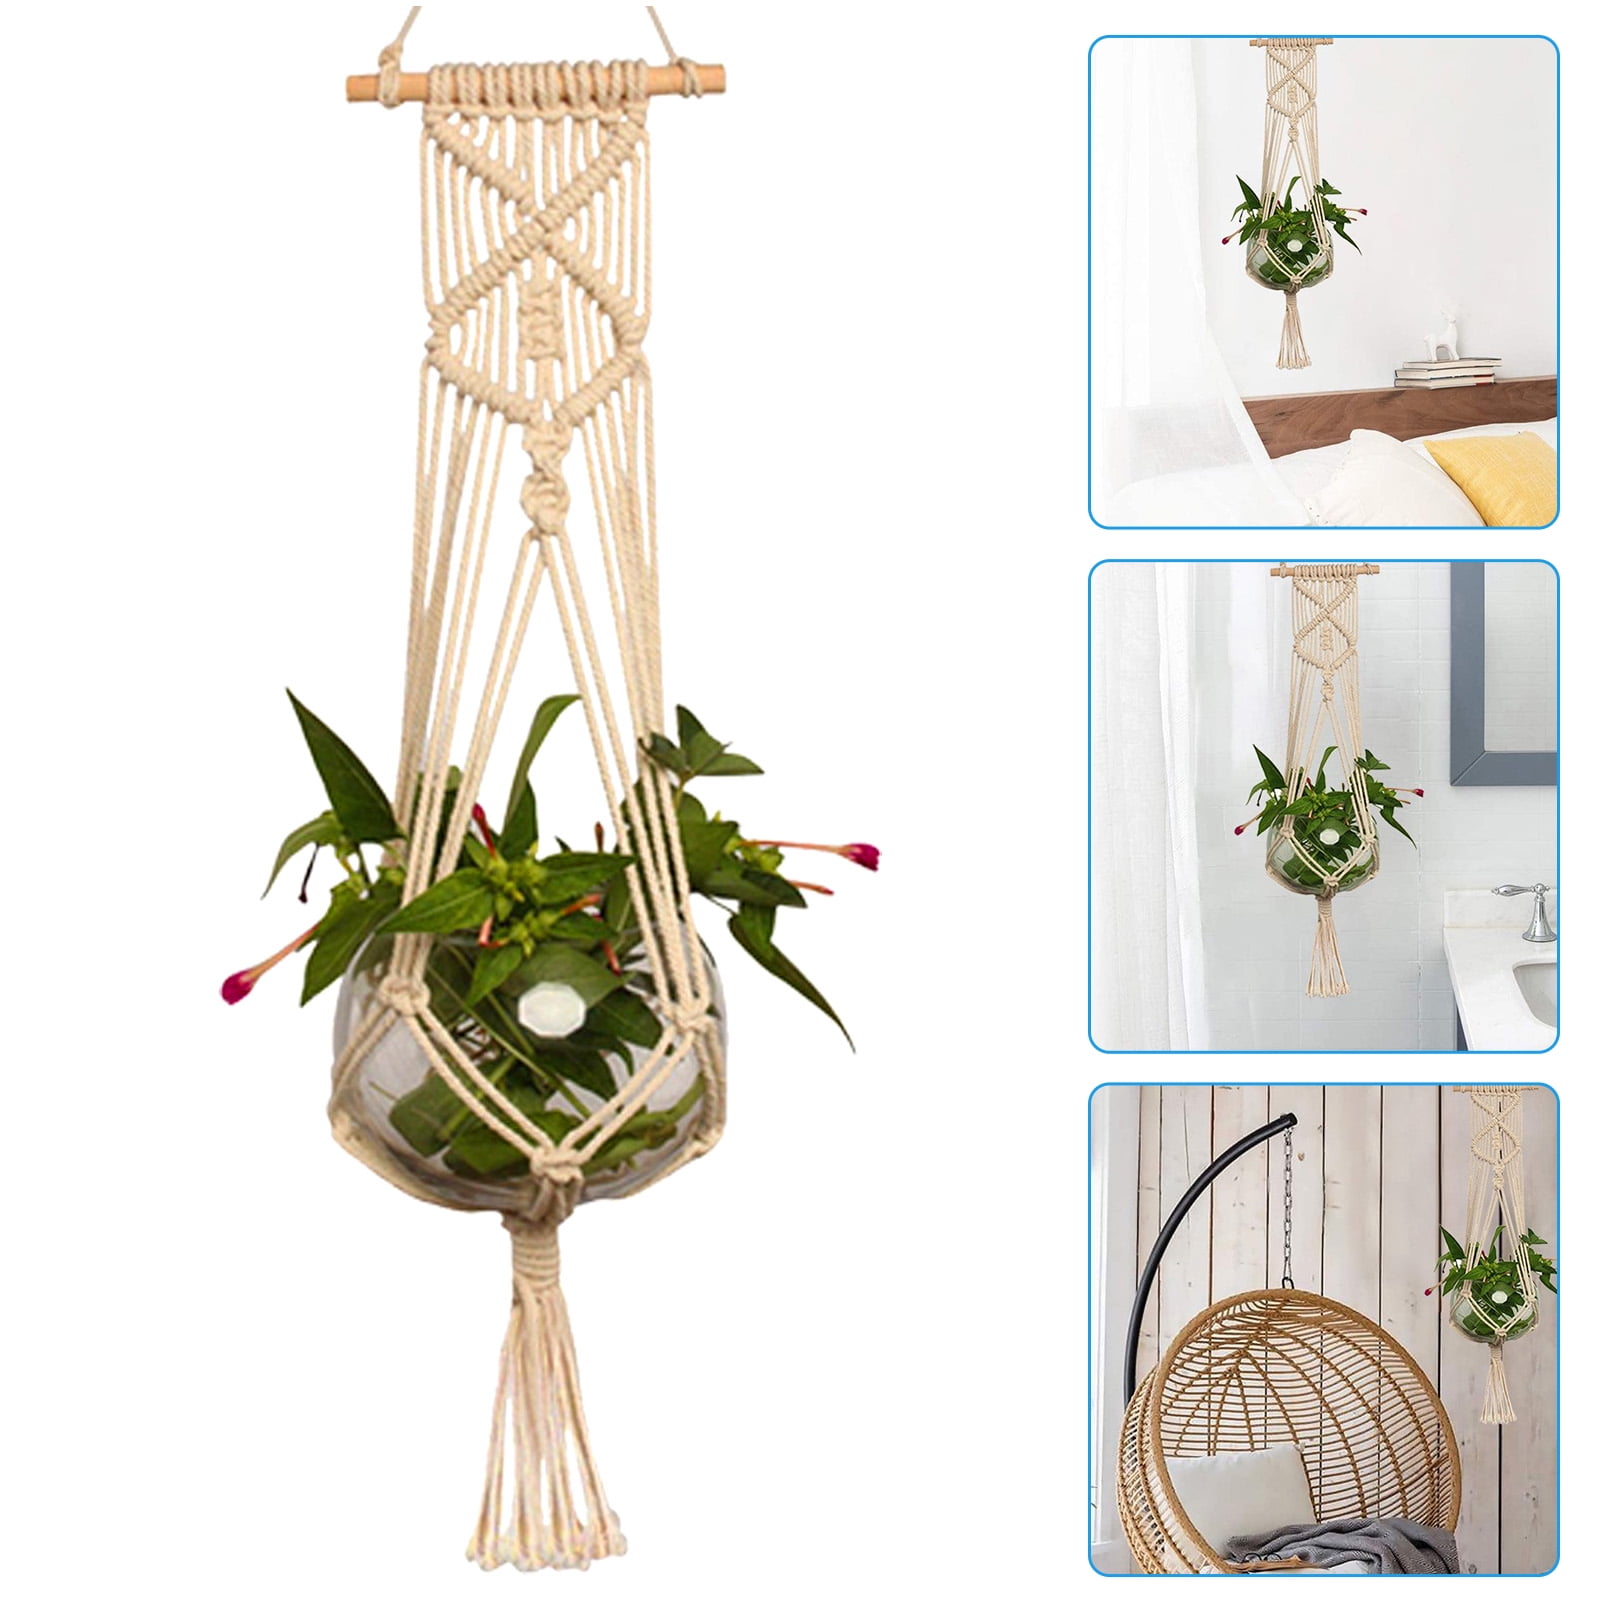 Pot holder macrame plant hanger hanging planter basket jute braided rope neKH 